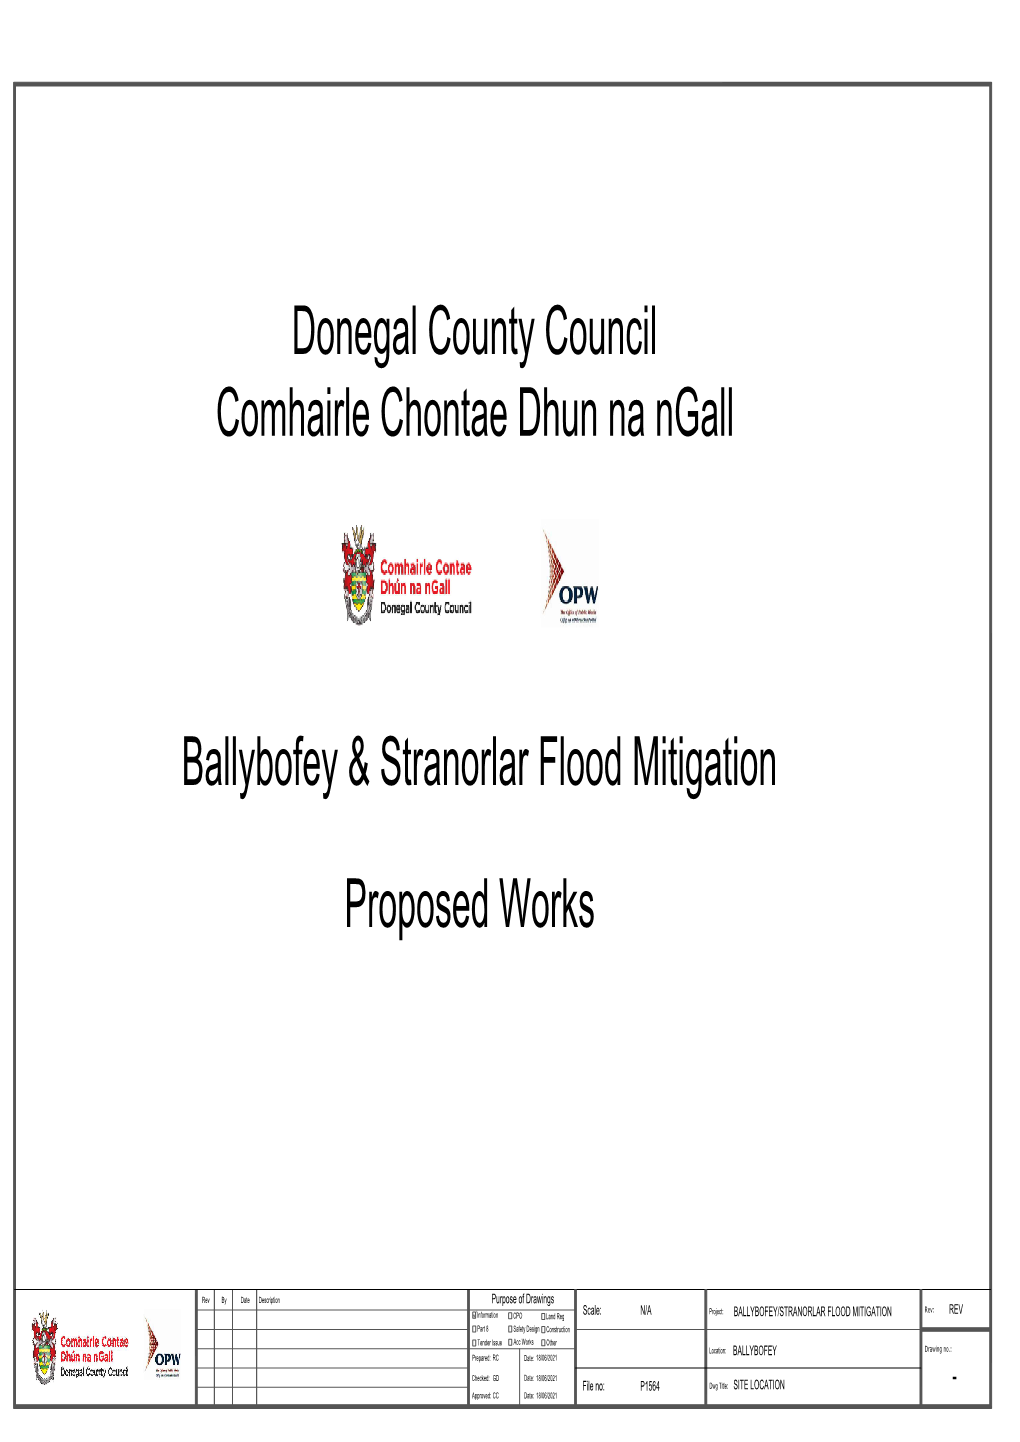 Ballybofey Stranorlar Flood Mitigation Proposed Works